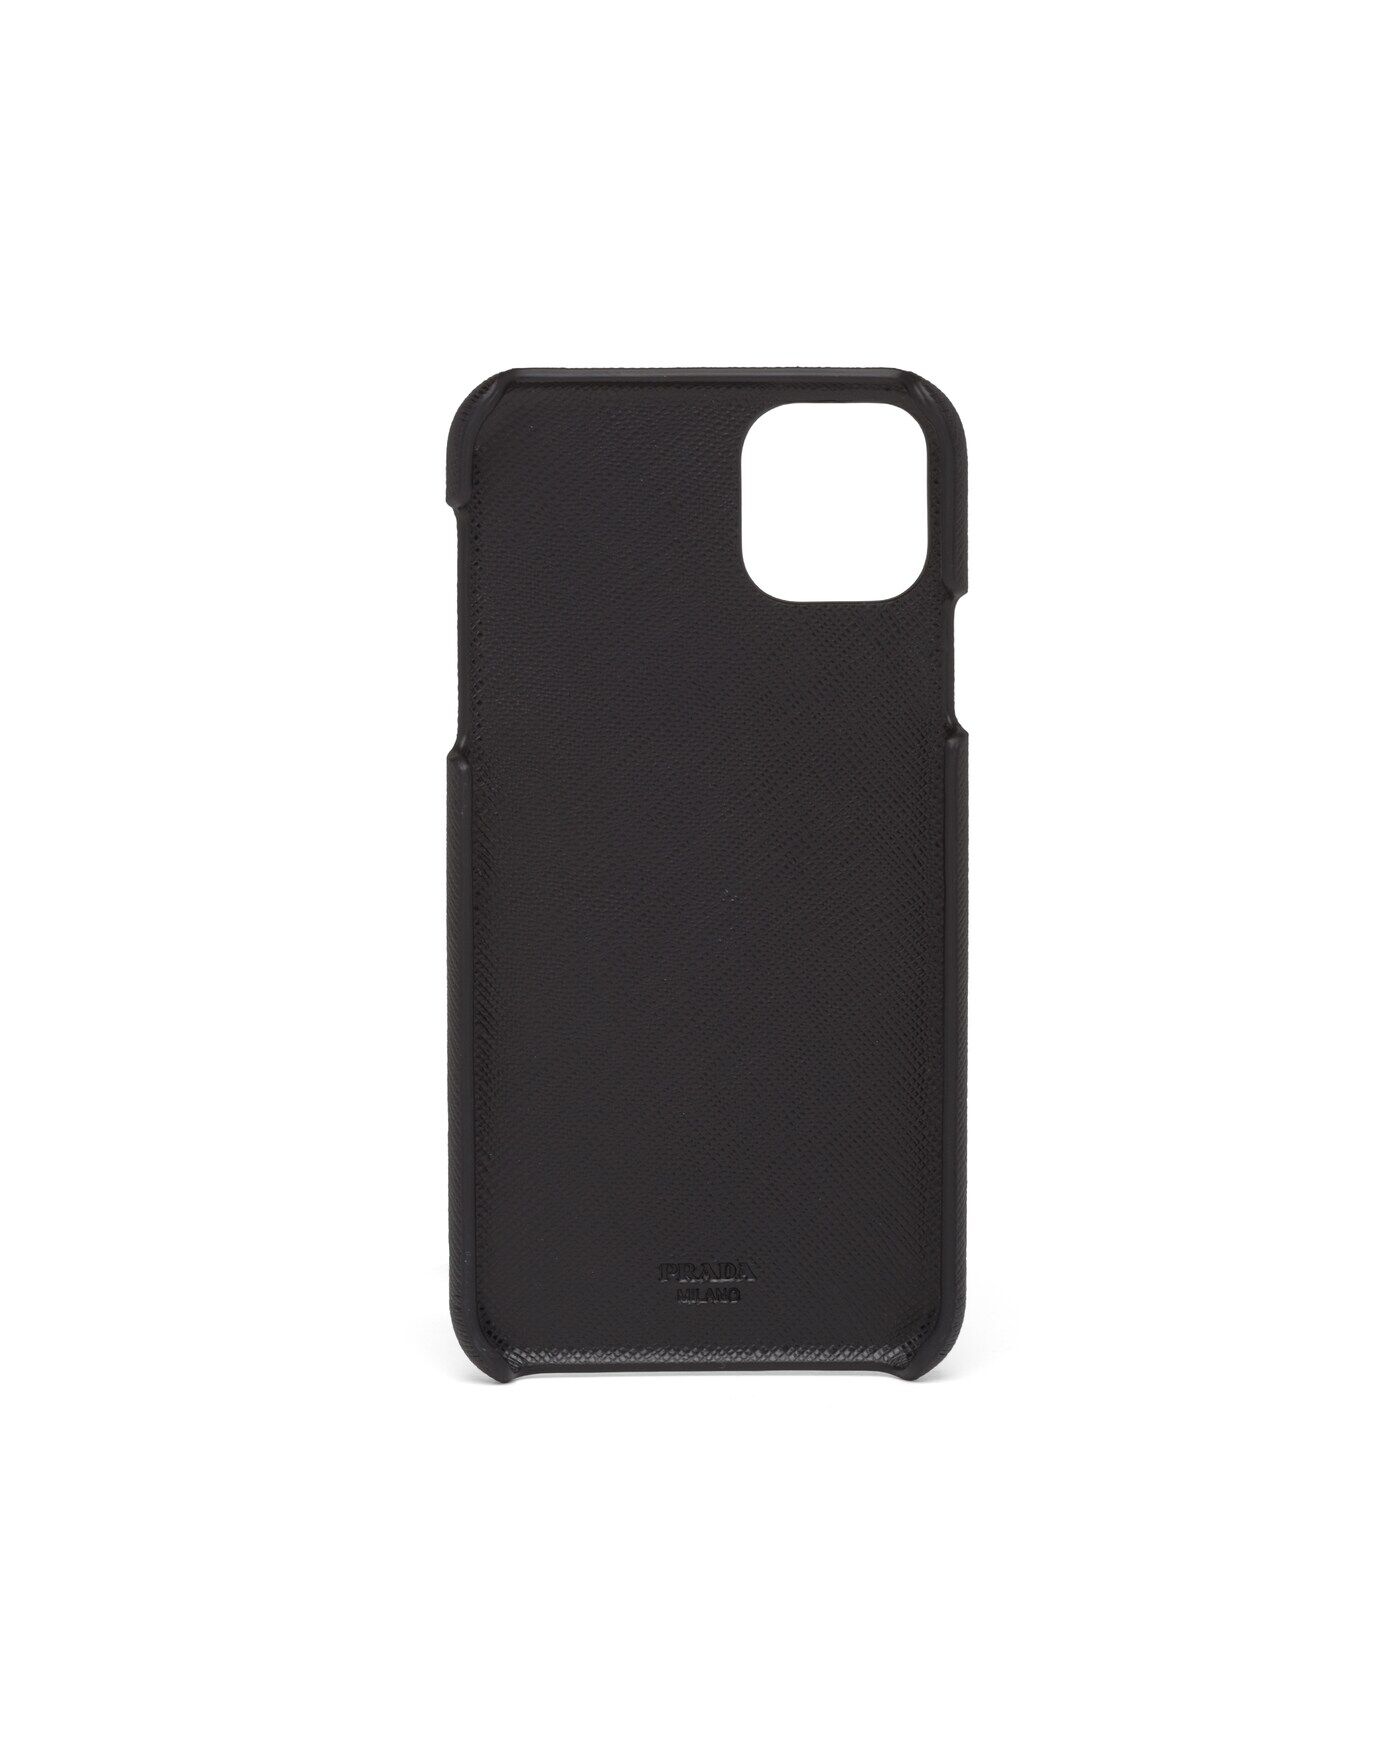 Prada Saffiano Leather iPhone 11 Pro Max Cover Smartphone Accessories |  Heathrow Boutique